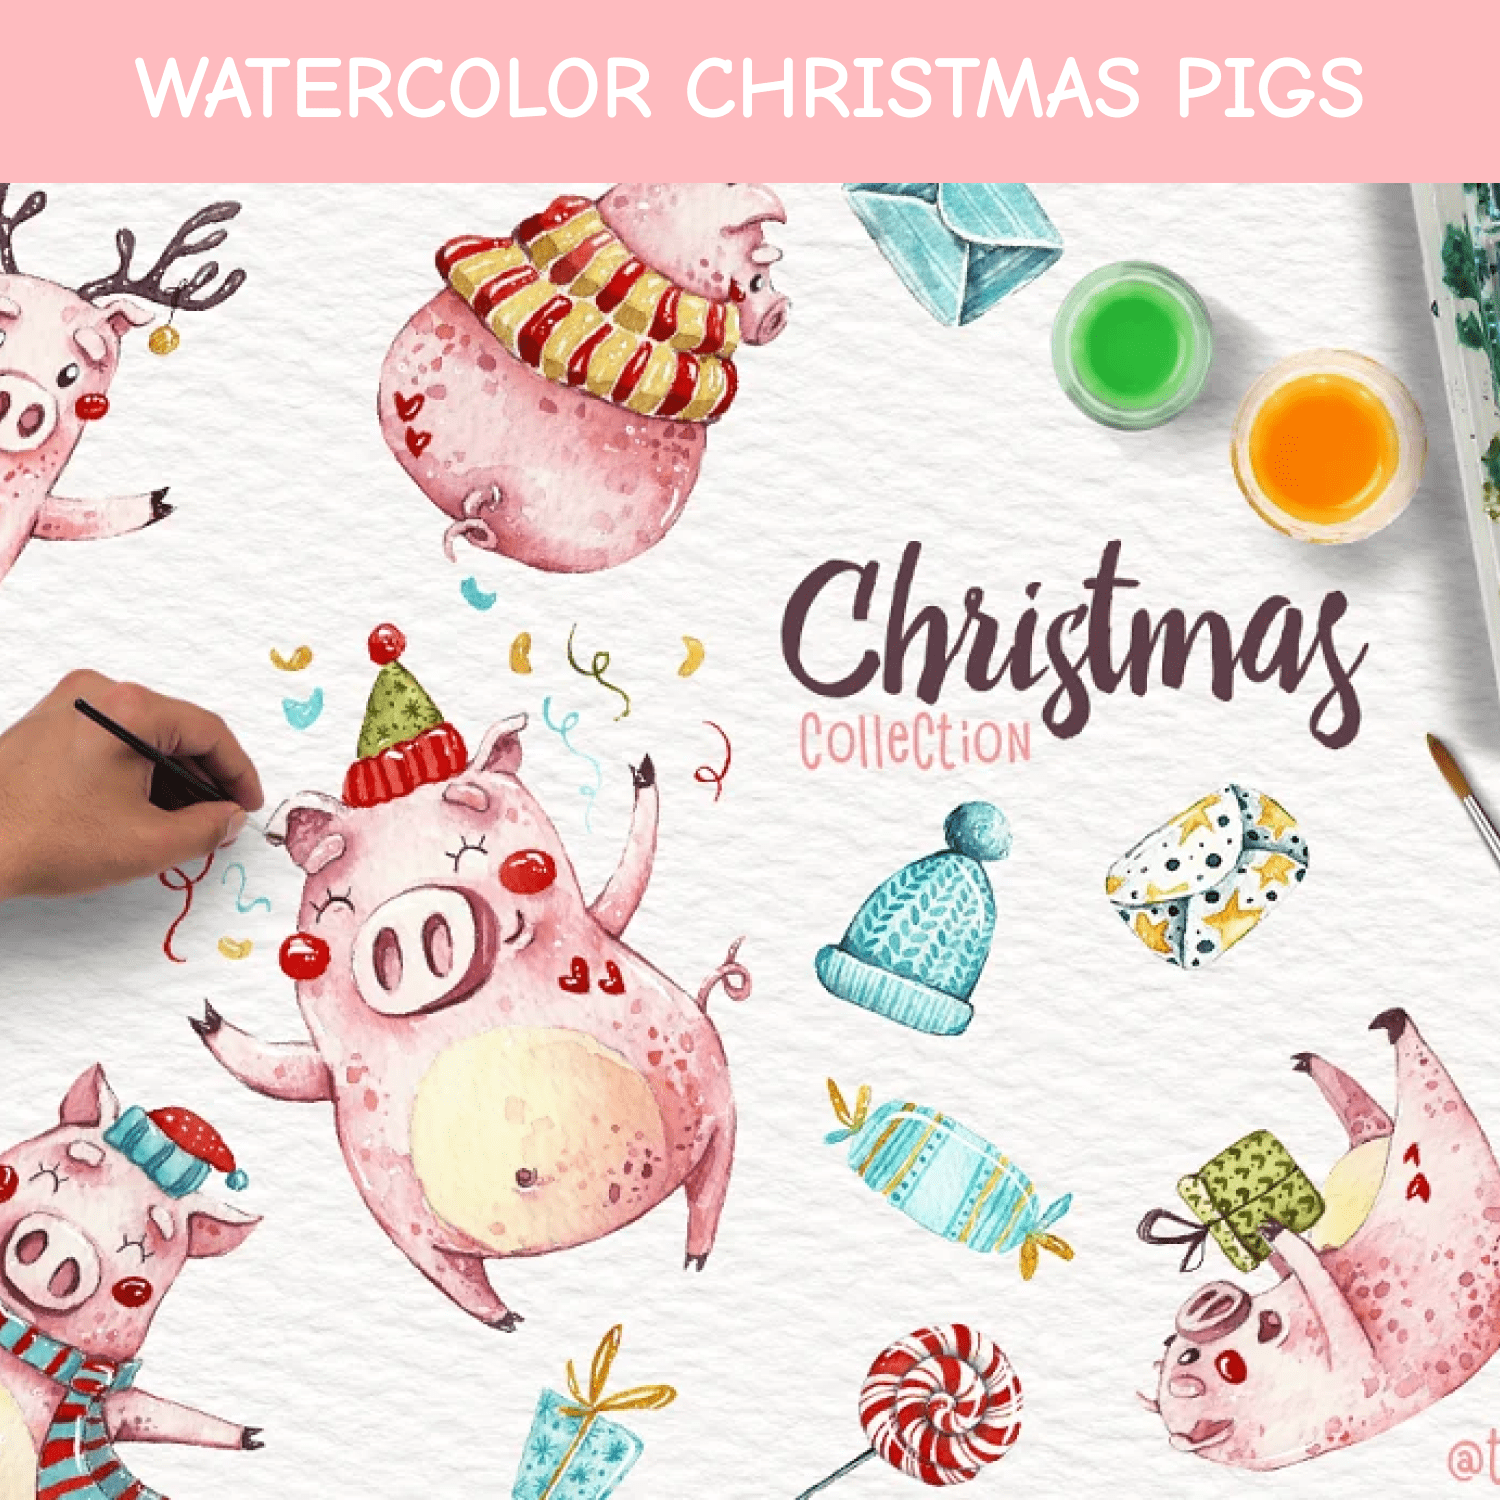 Watercolor Christmas pigs.